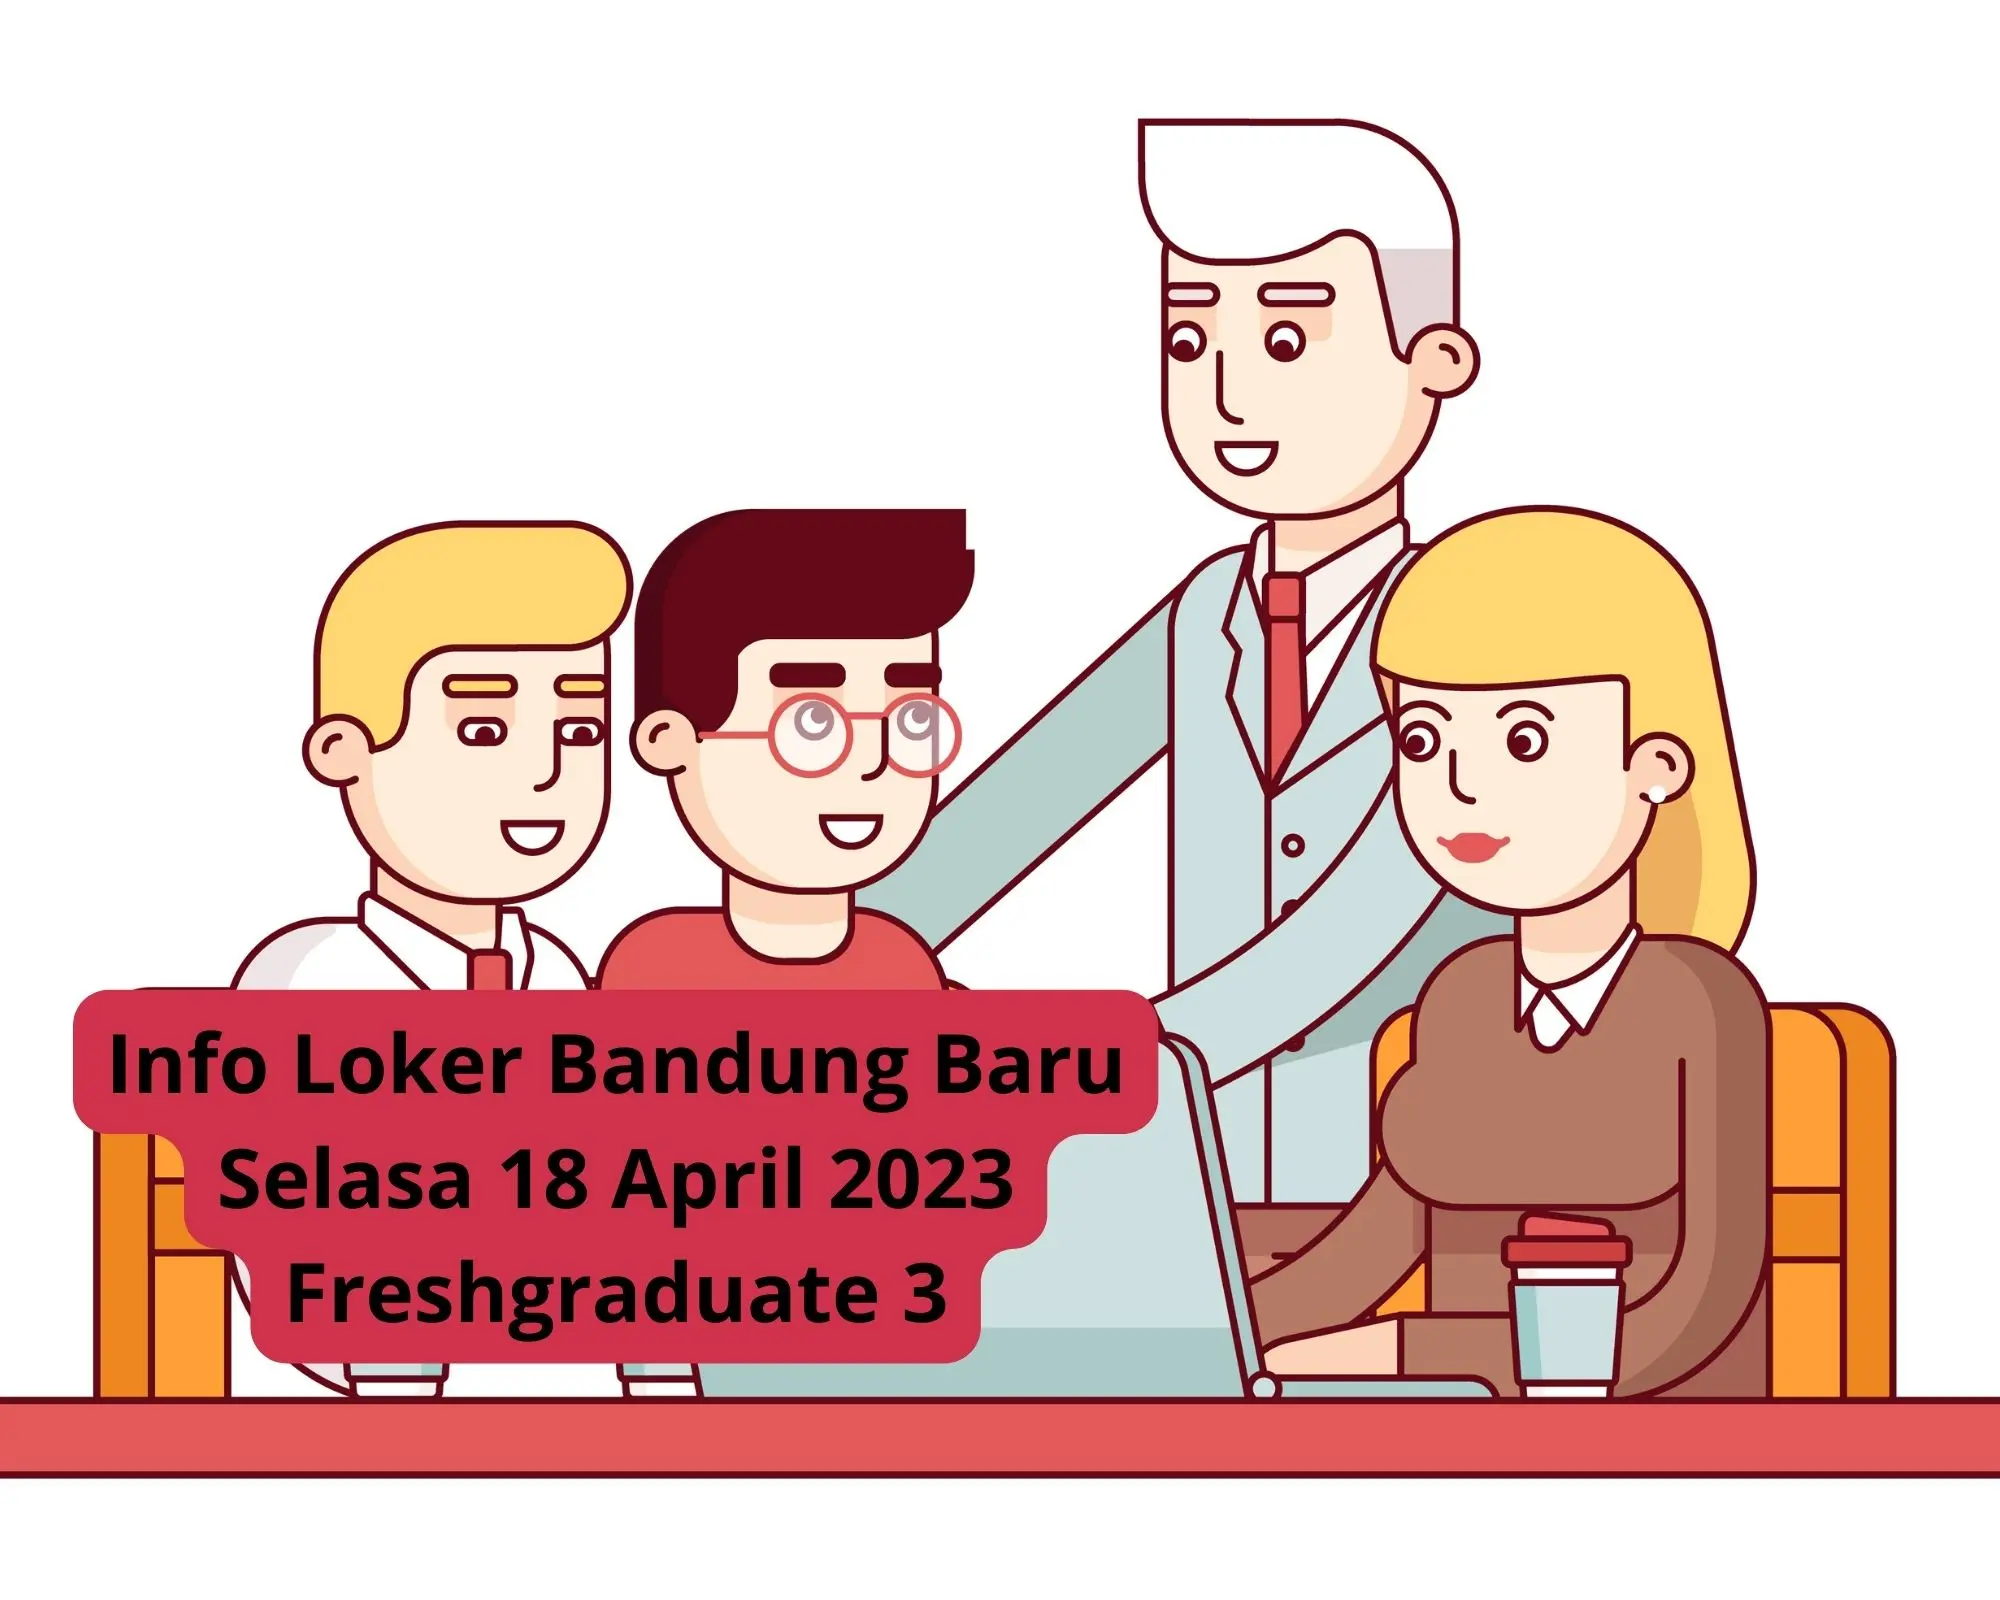 Info Loker Bandung Baru Selasa 18 April 2023 Freshgraduate 3